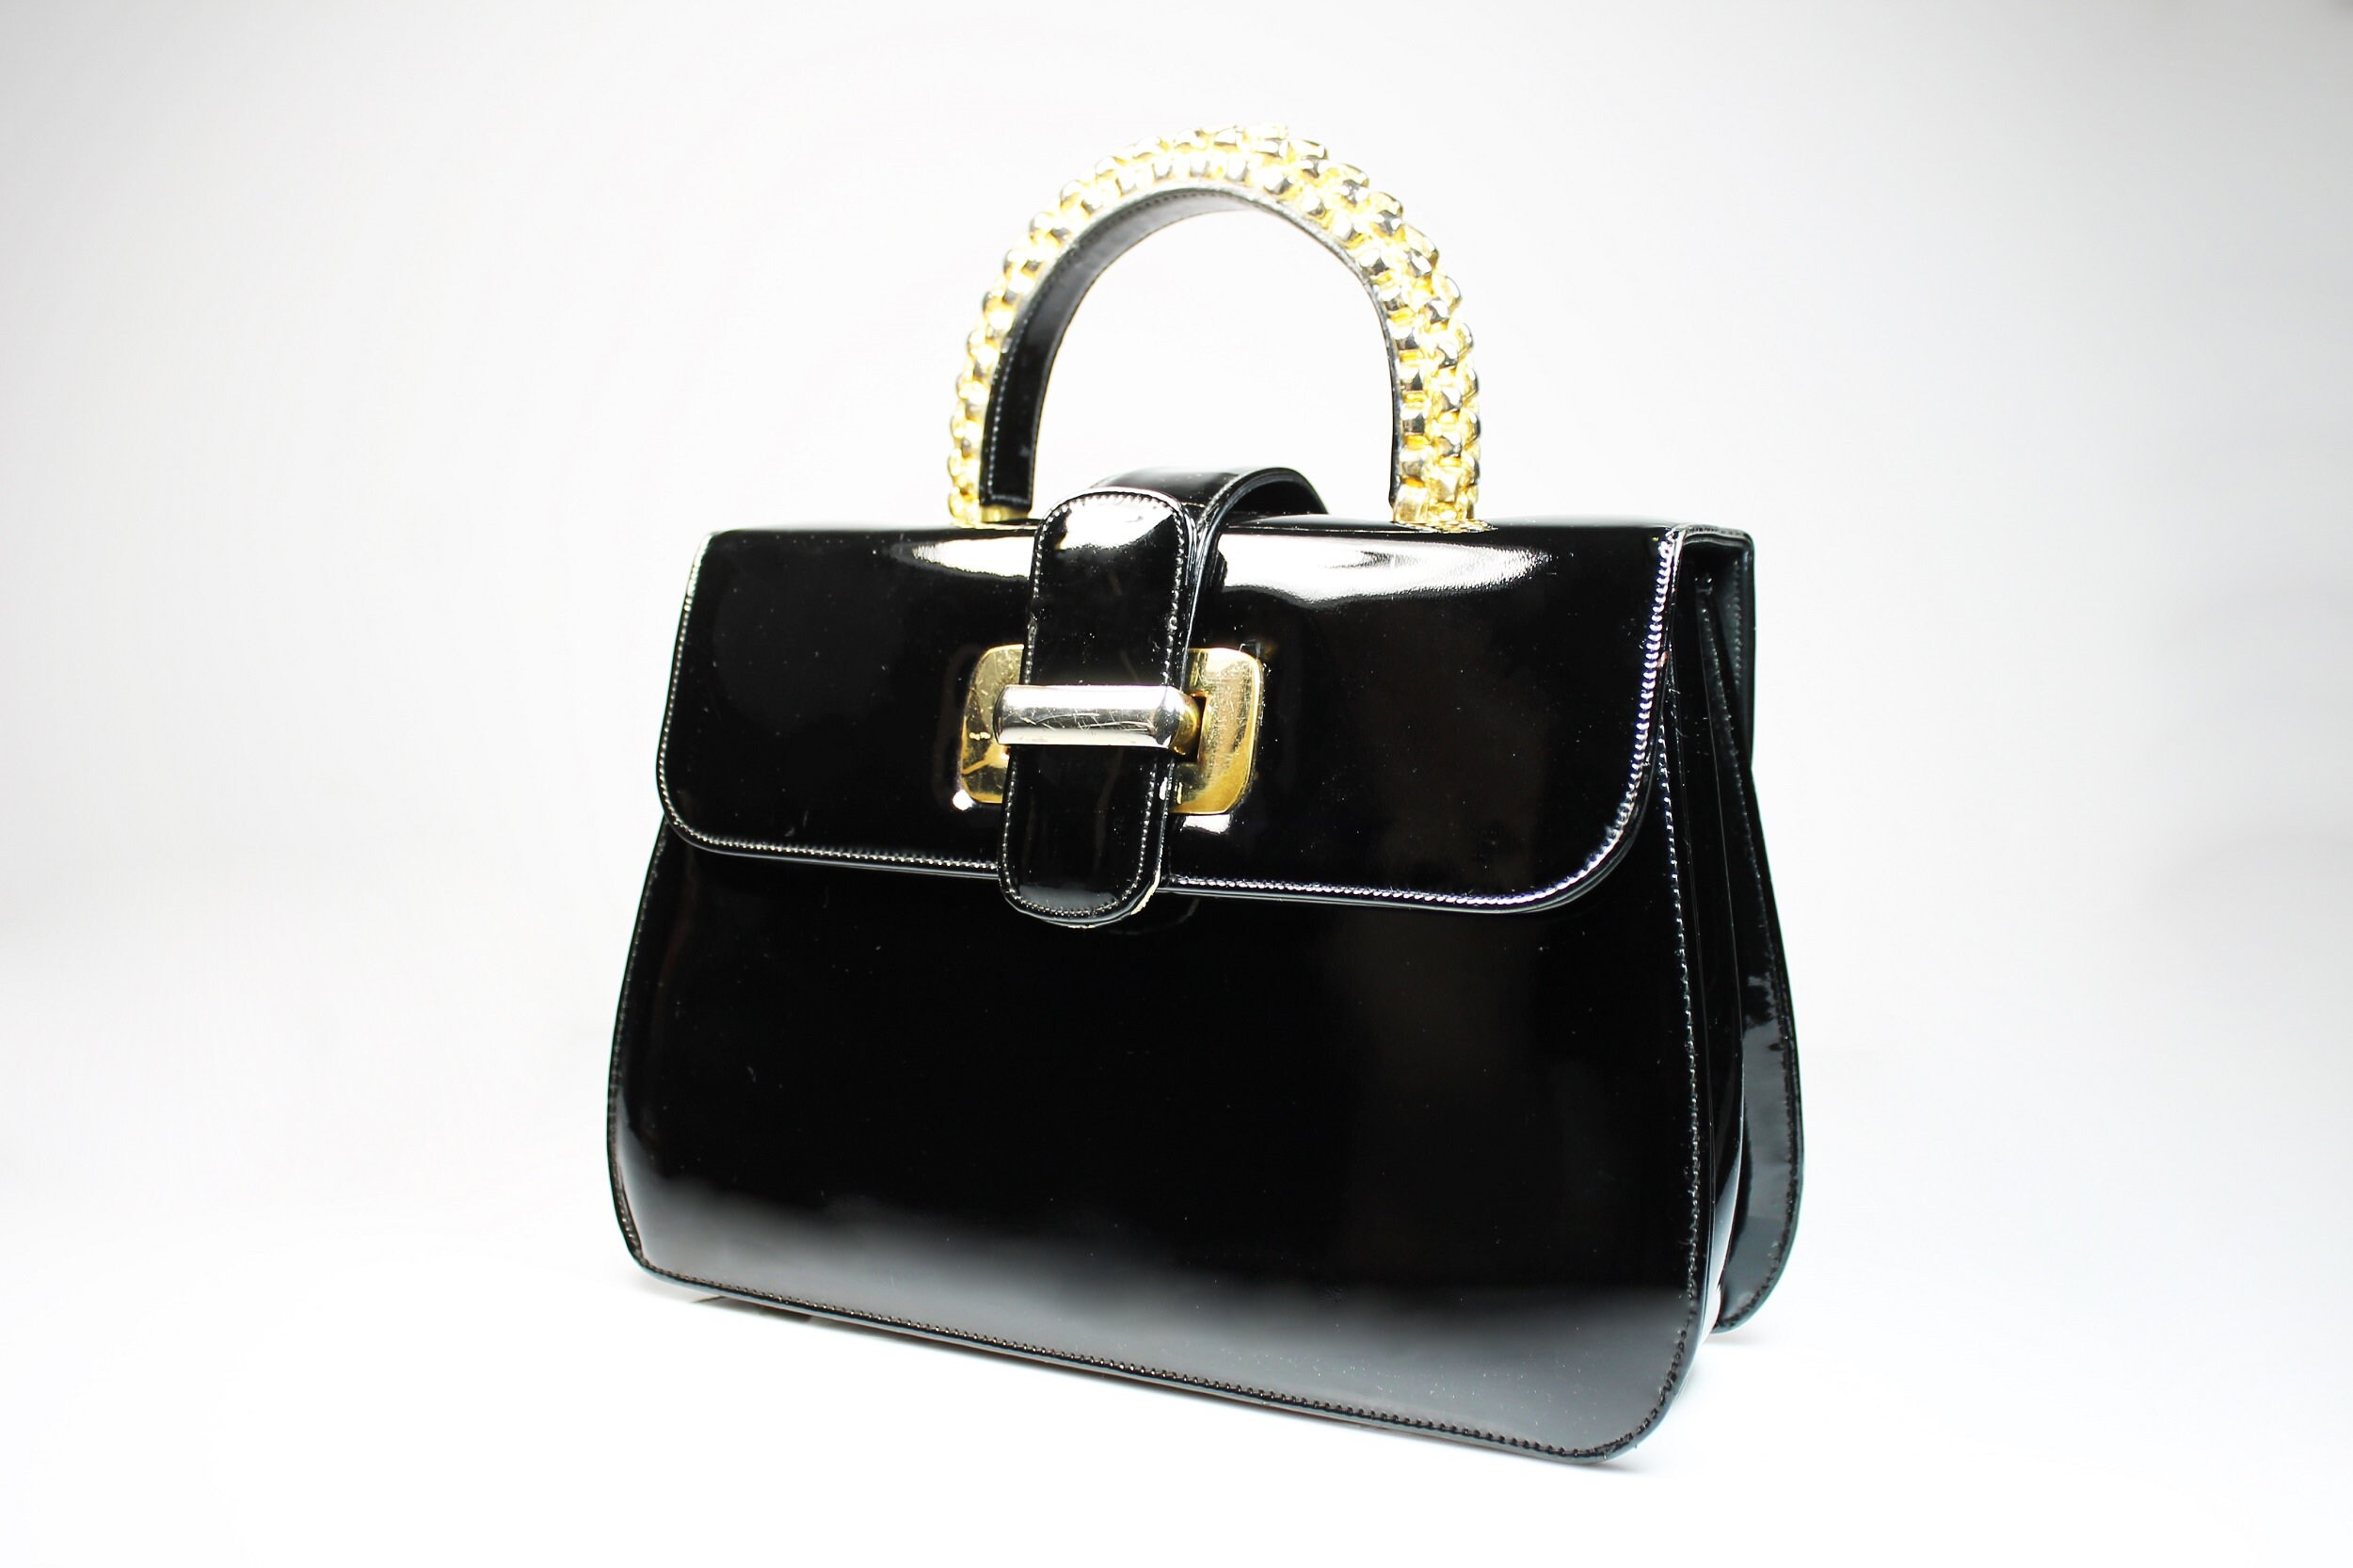 Milch Black Handbag, Patent Leather, Gold Top Handle, Dress Bag, Retro ...